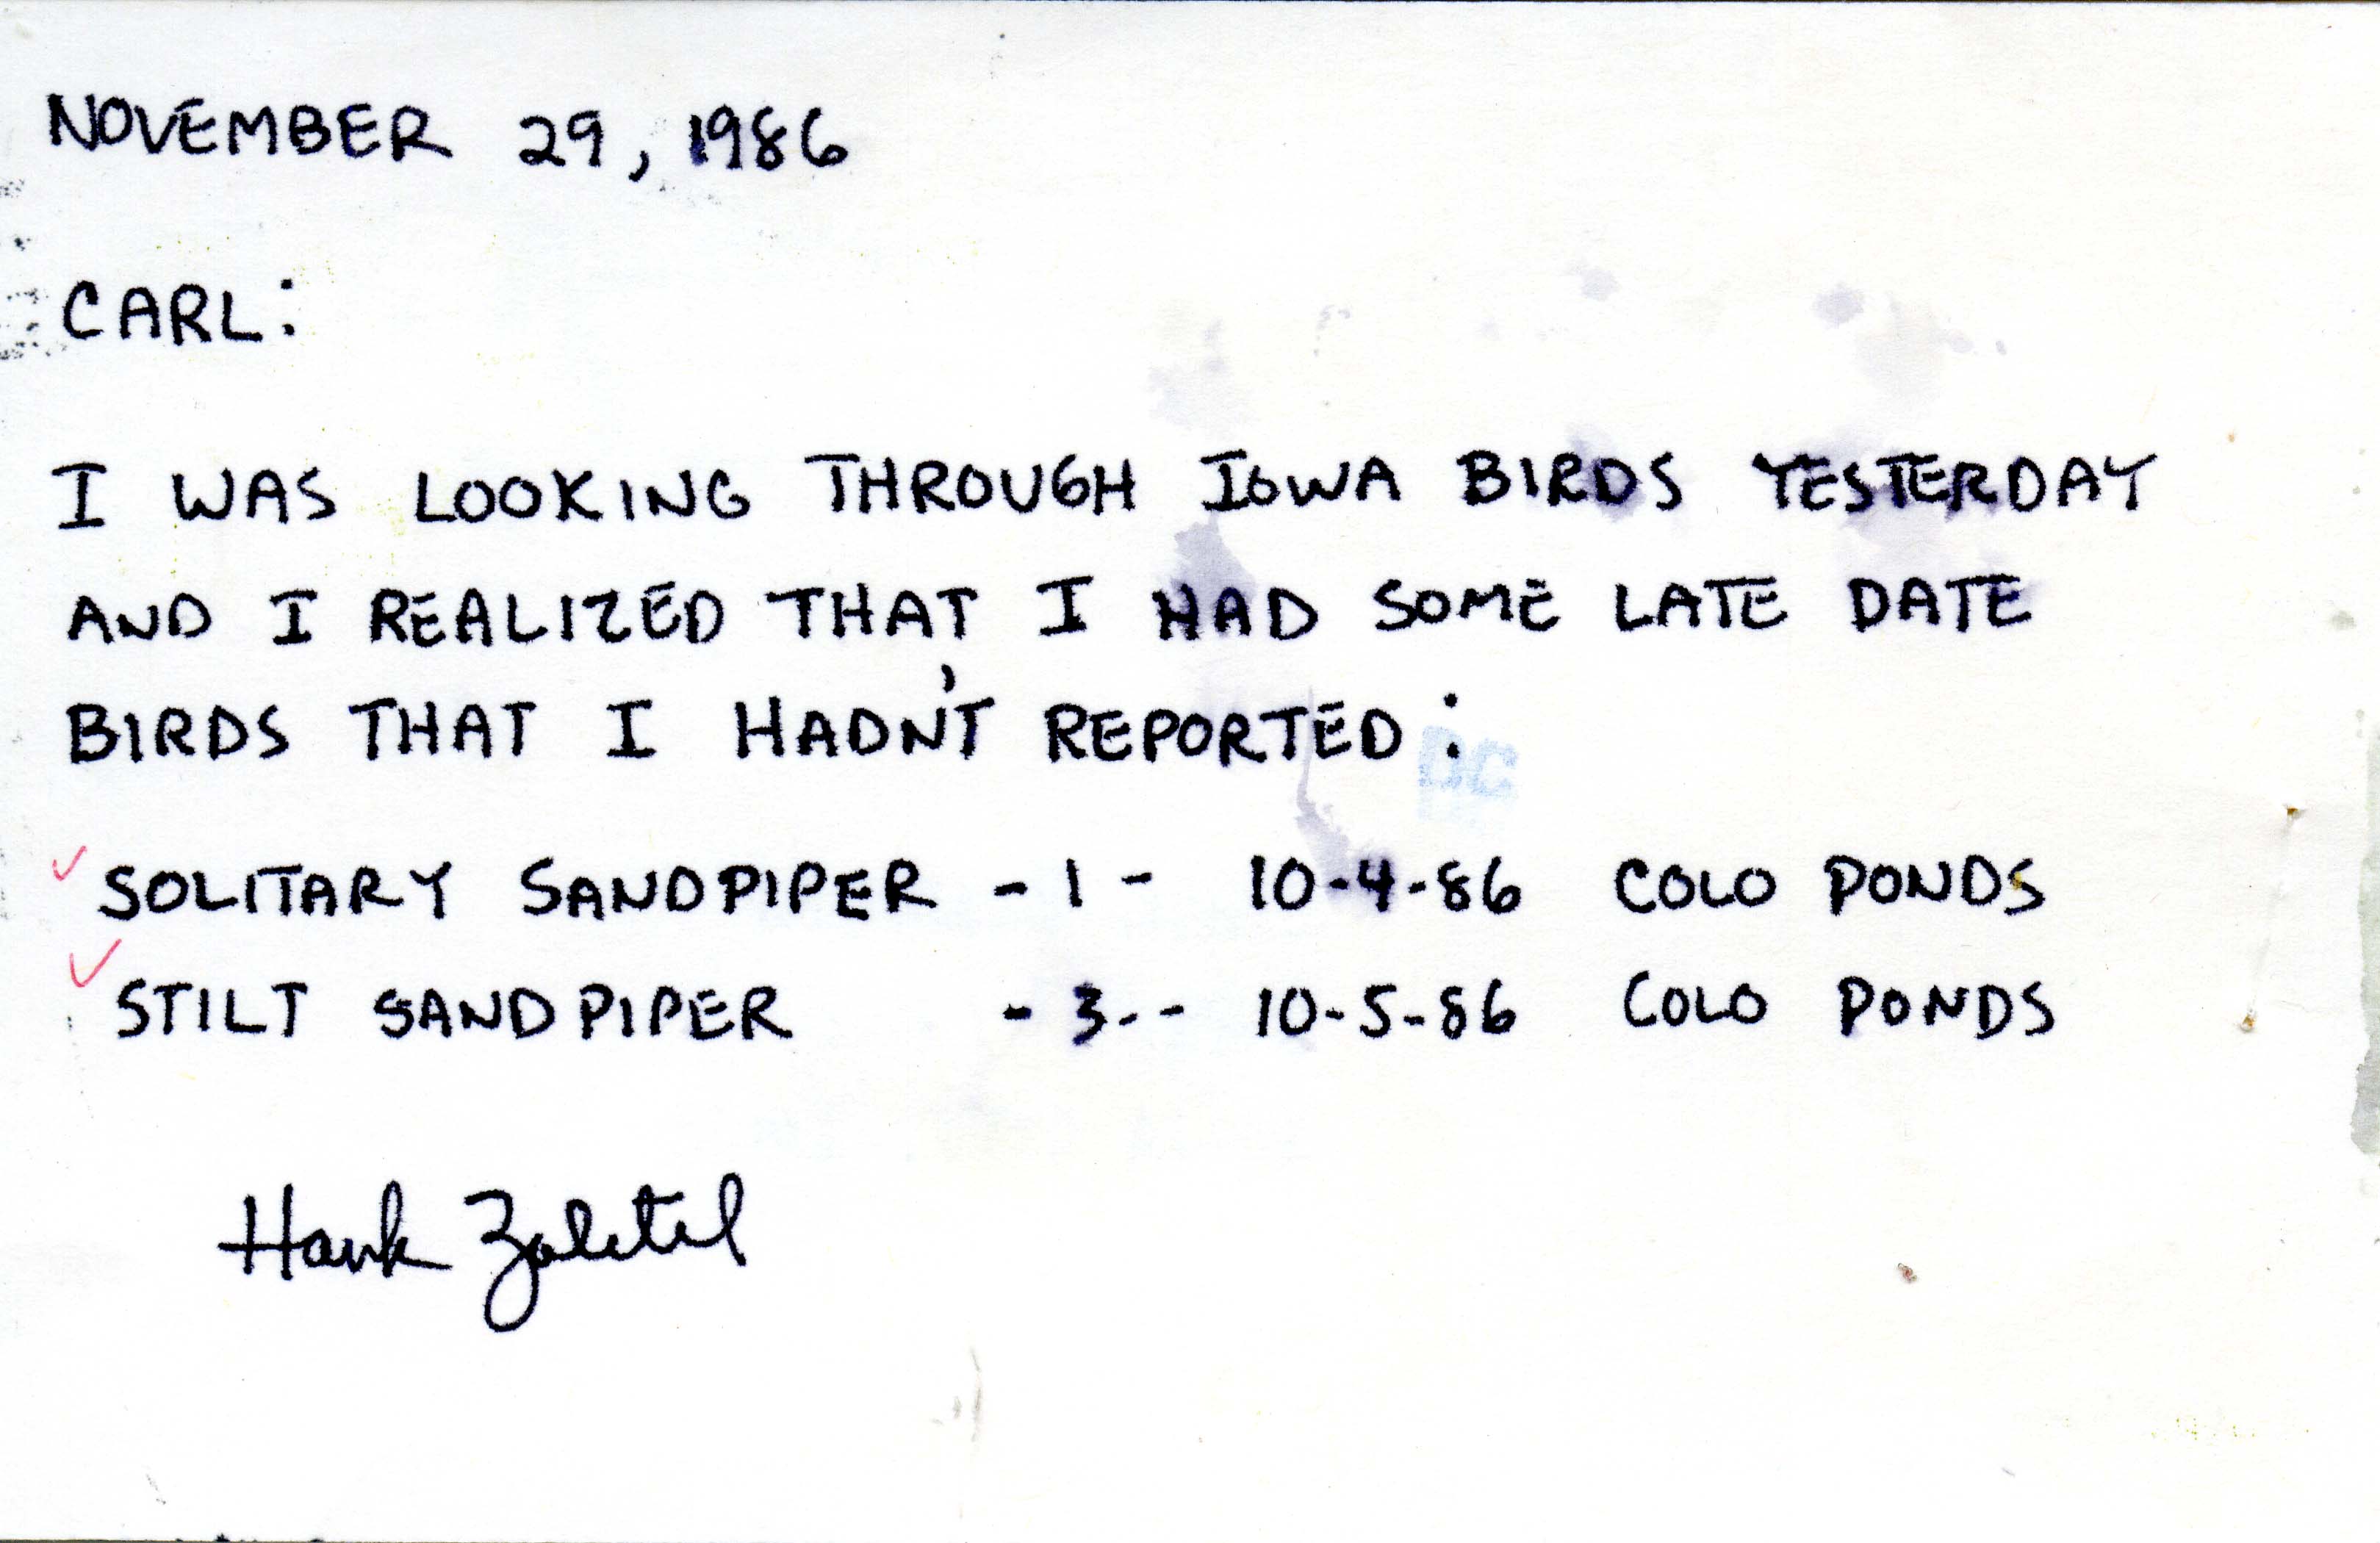 Hank Zaletel letter to Carl J. Bendorf regarding bird sightings, November 29, 1986